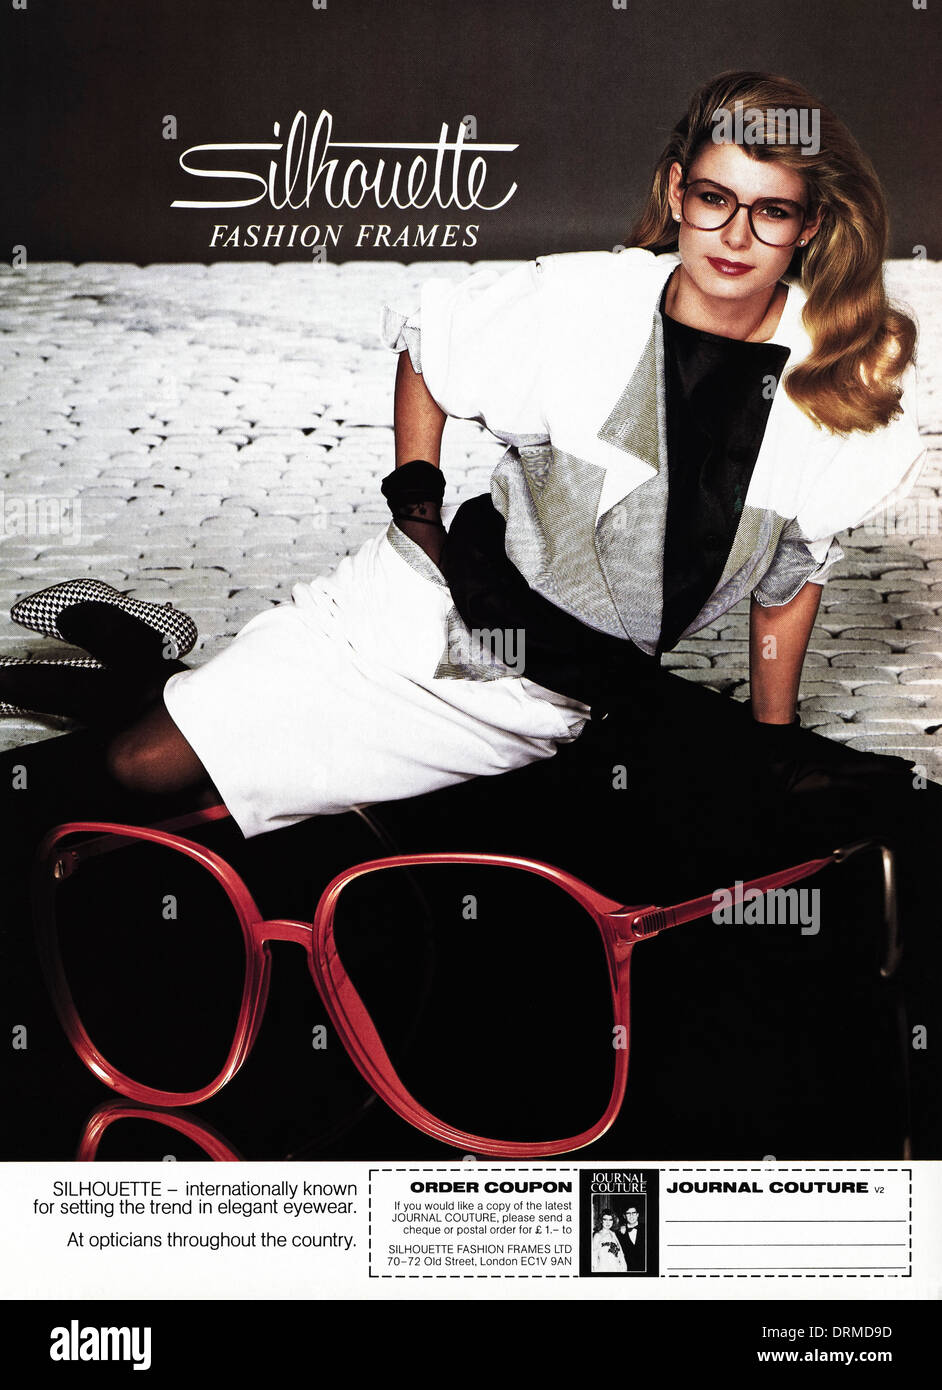 1980s fashion advertisement SILHOUETTE FASHION FRAMES eyewear, advert circa 1983 Stock Photo - Alamy